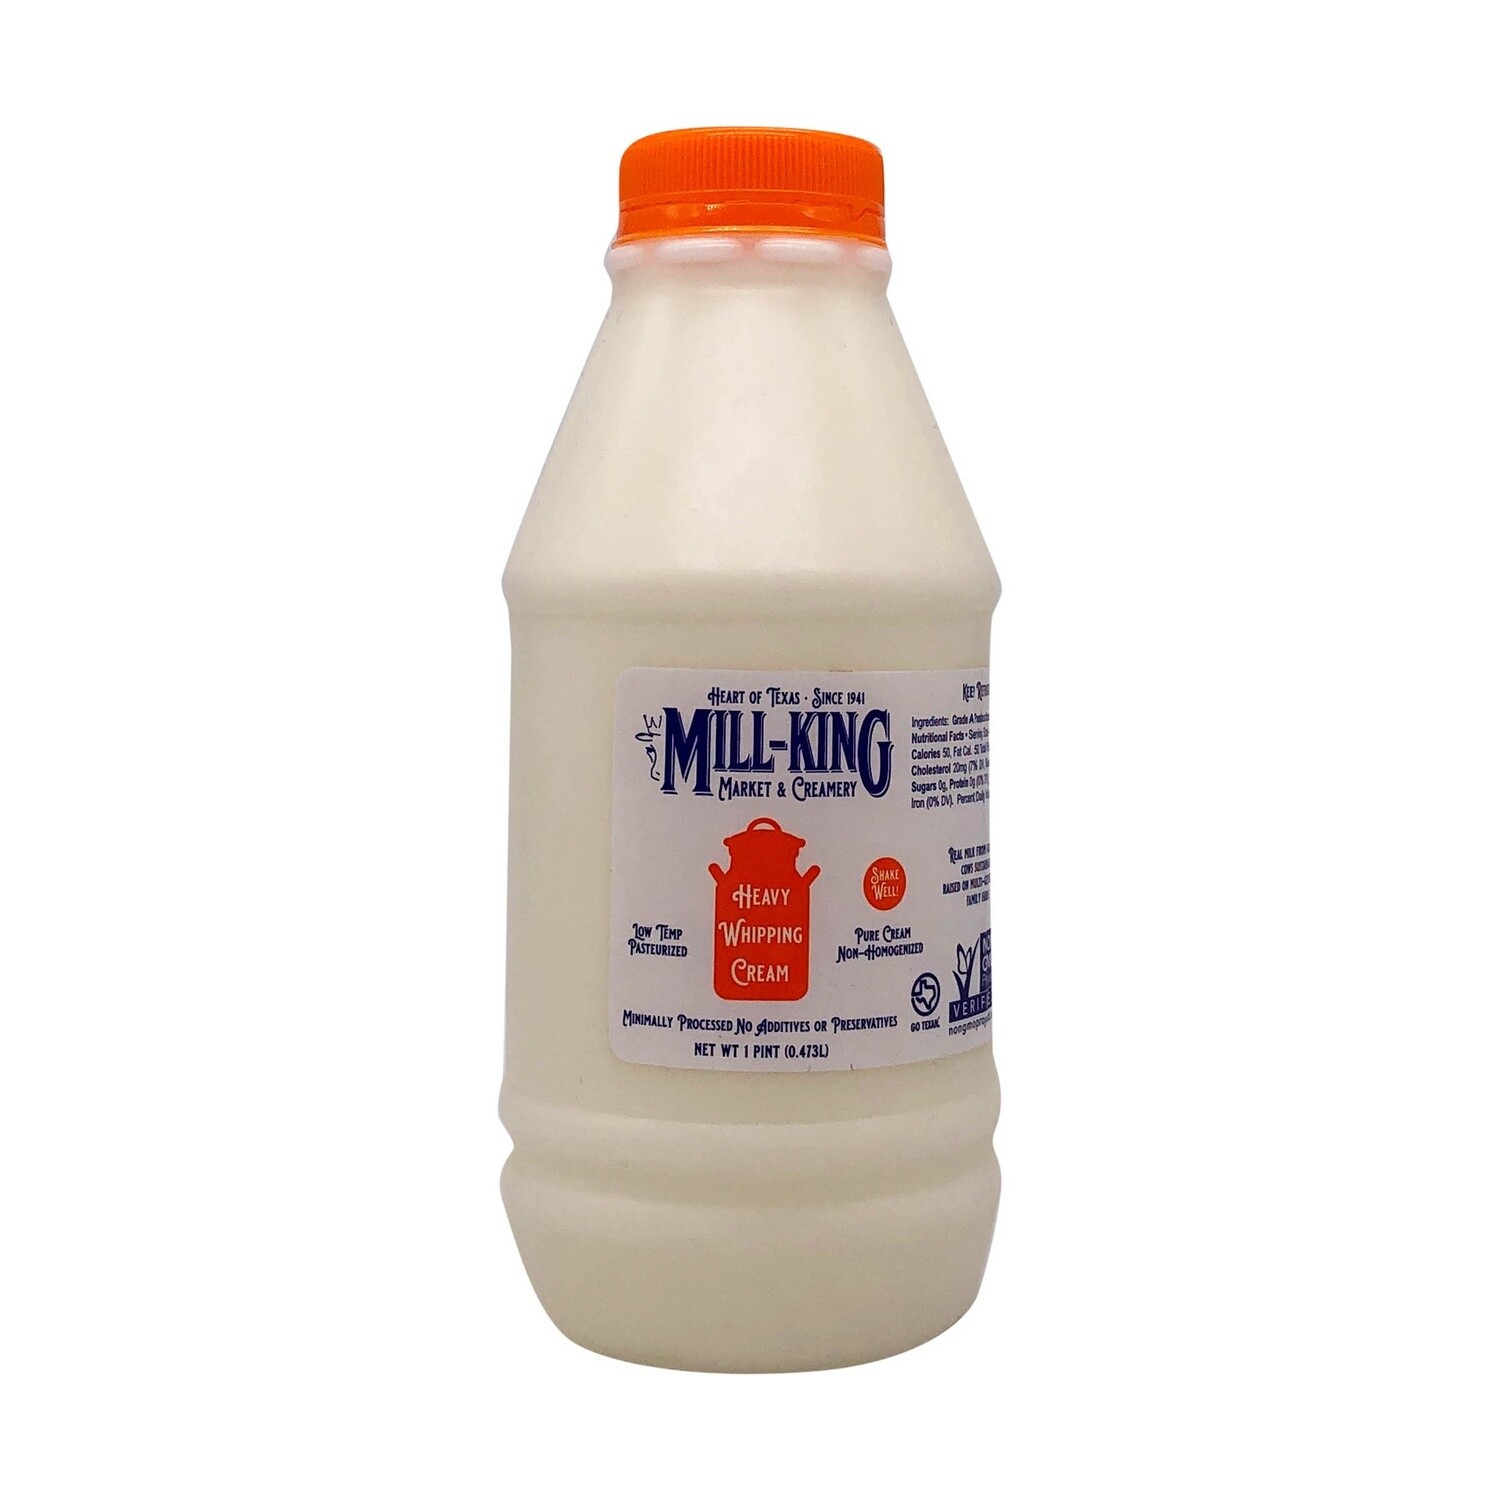 Heavy Whipping Cream - Organic - Mill King